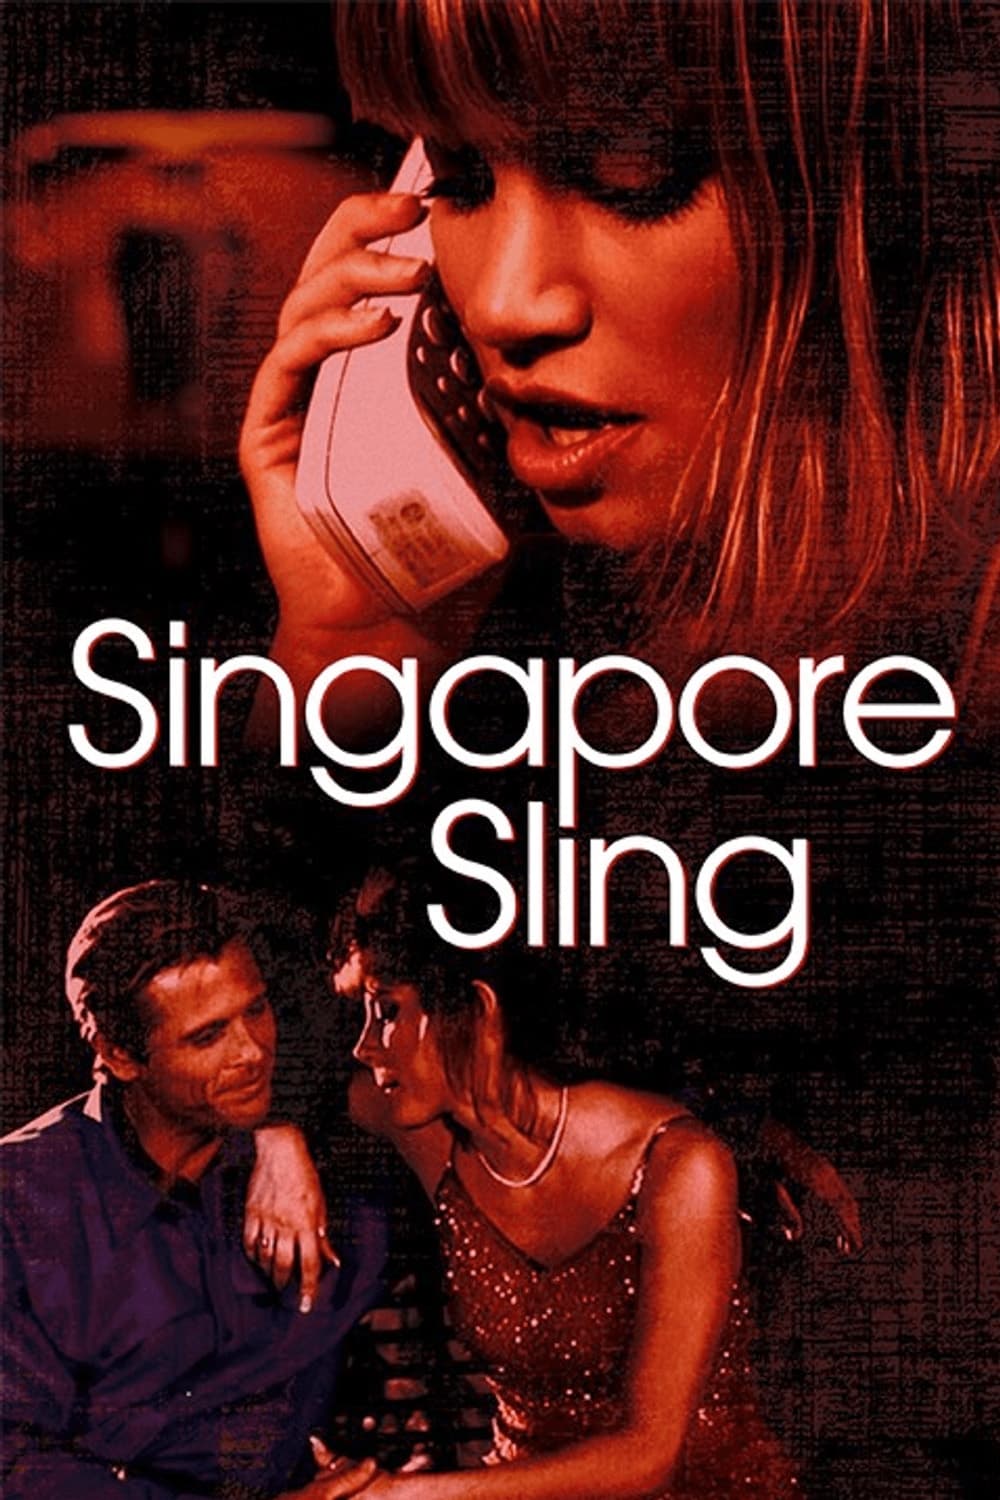 Singapore Sling (1999)